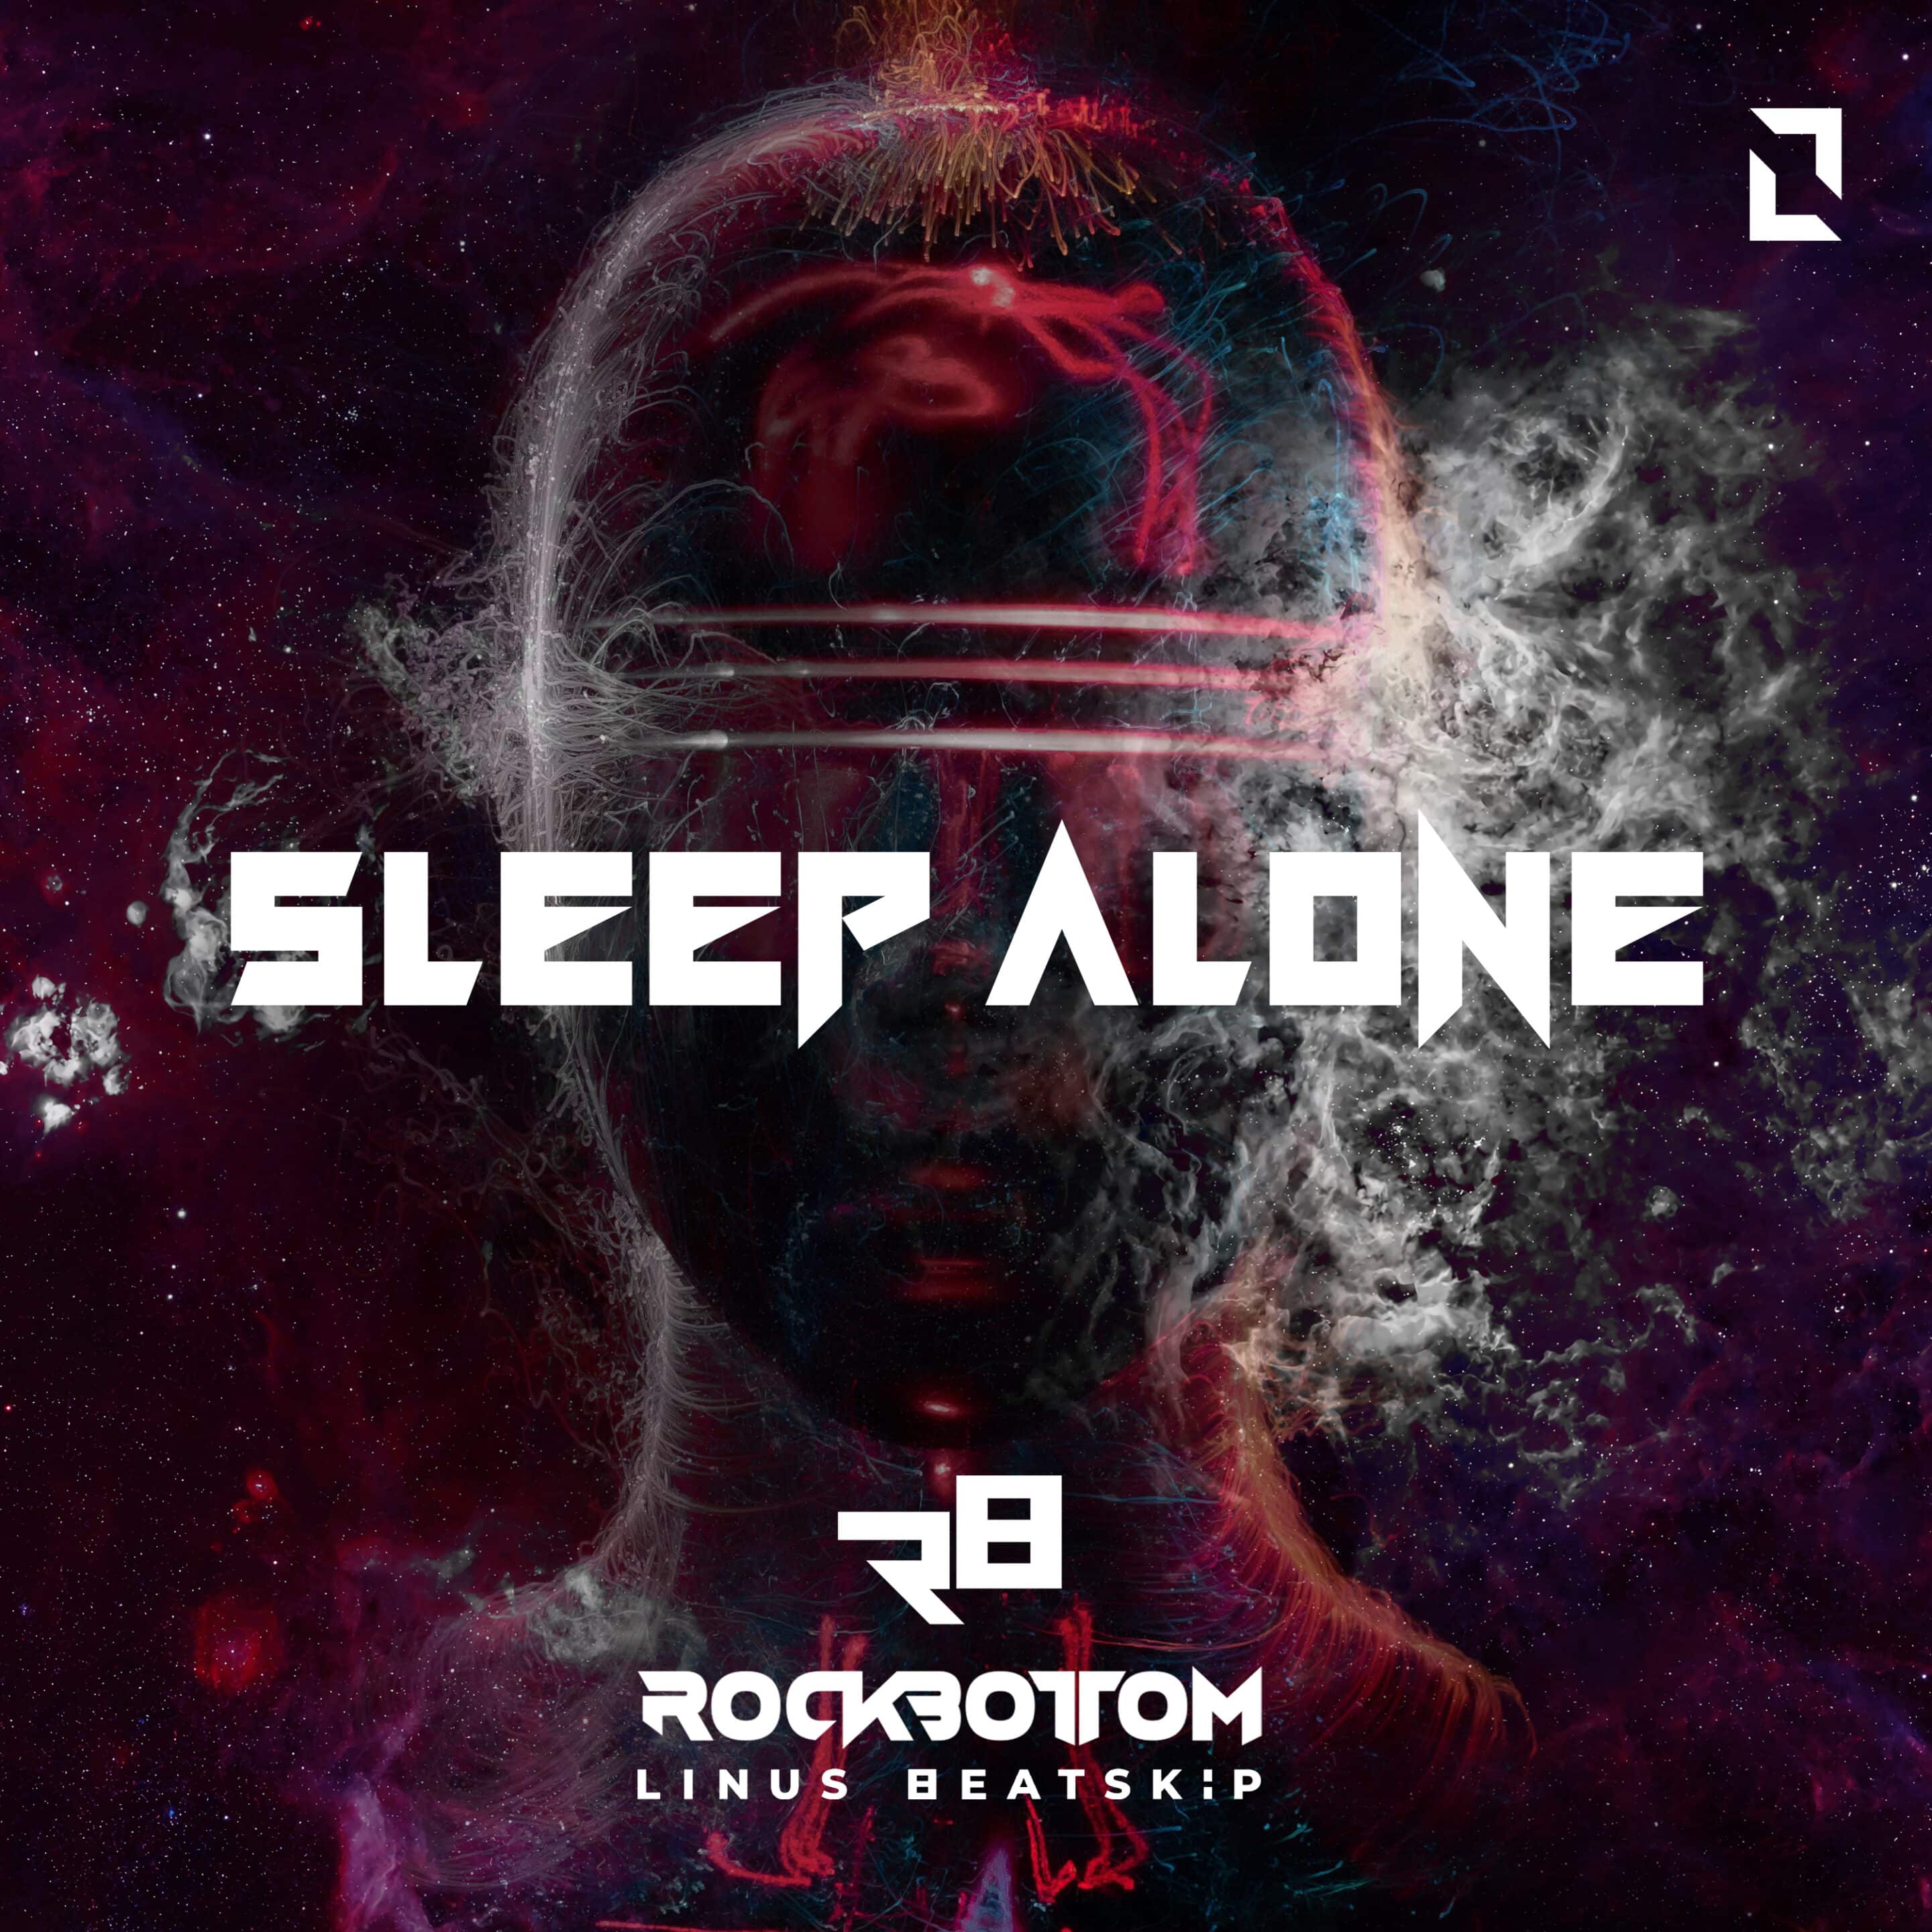 Sleep Alone song cover art